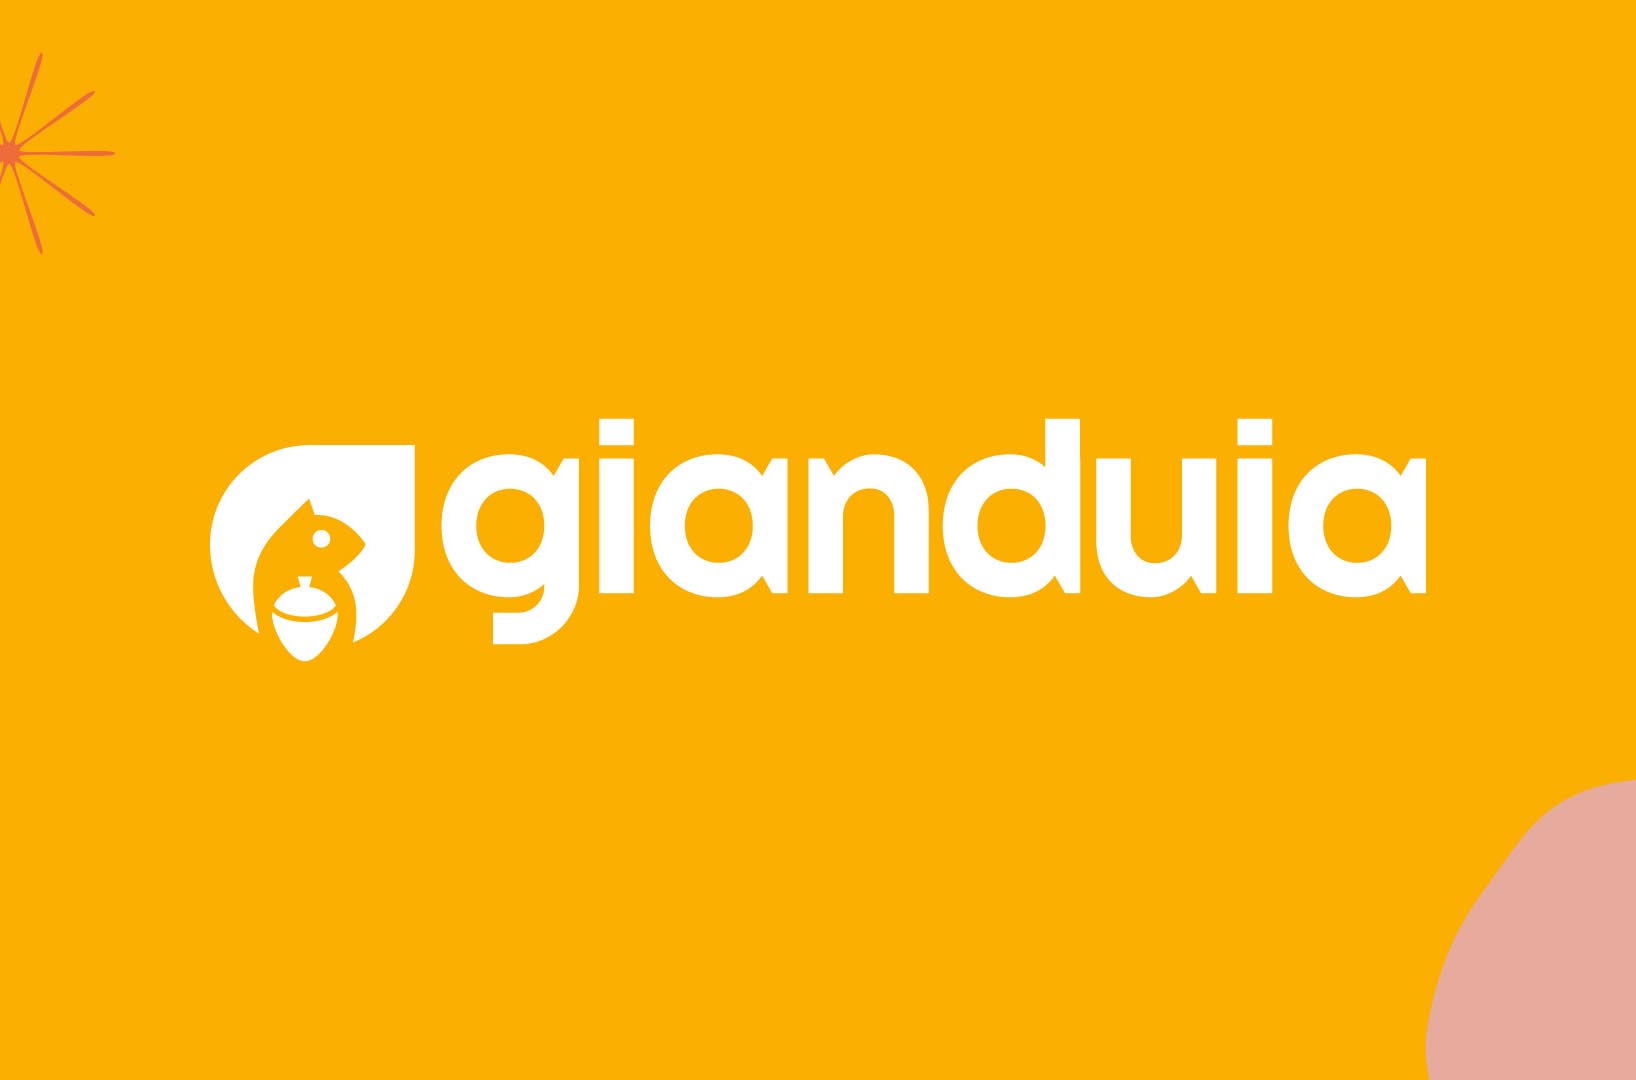 Gianduia